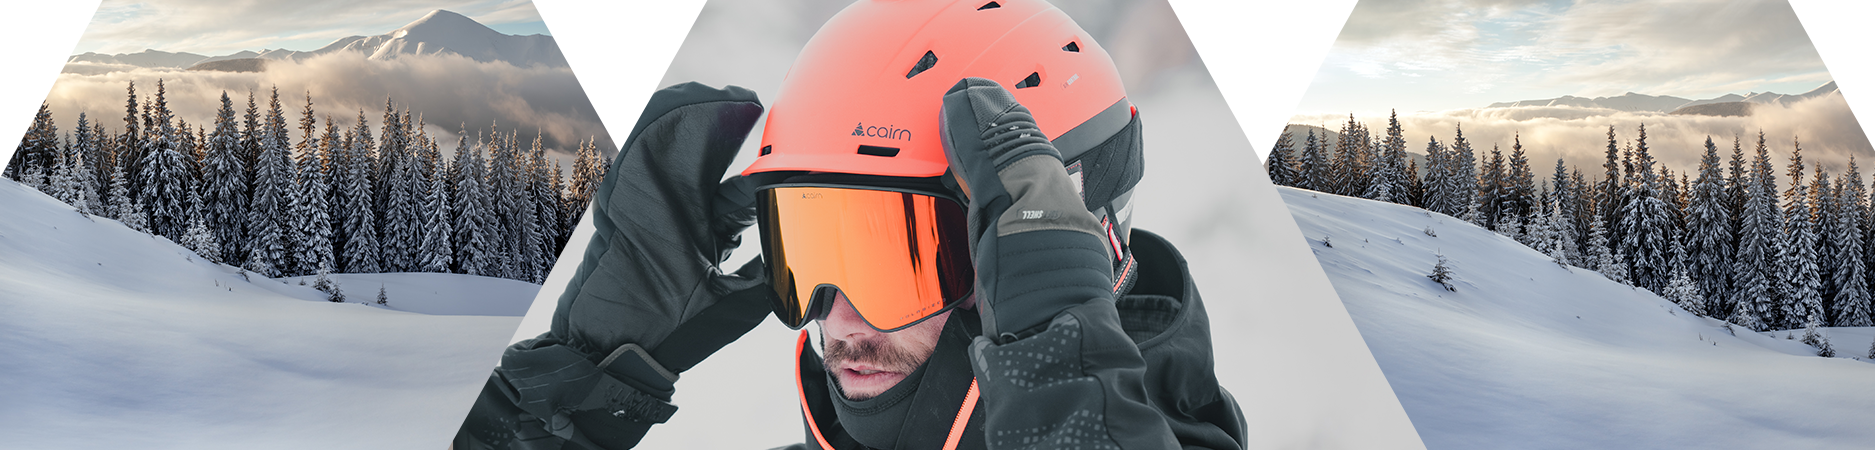 MASQUES ET CASQUES DE SKI Cairn COSMOS - Casque de ski avec écran